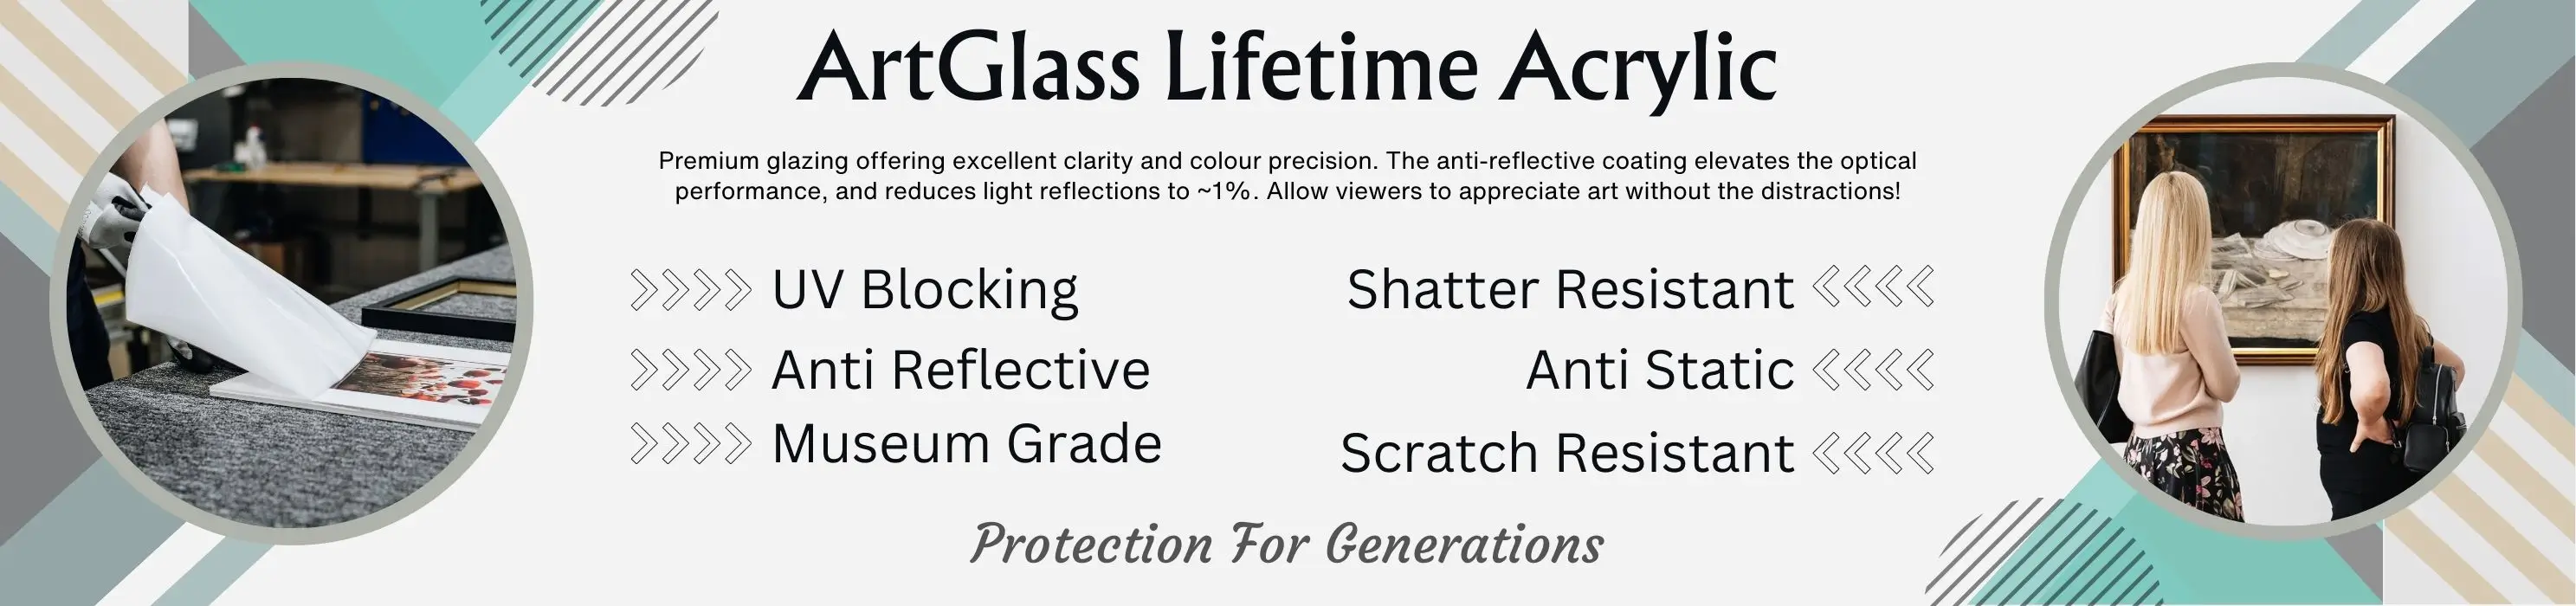 Artglass lifetime acrylic banner